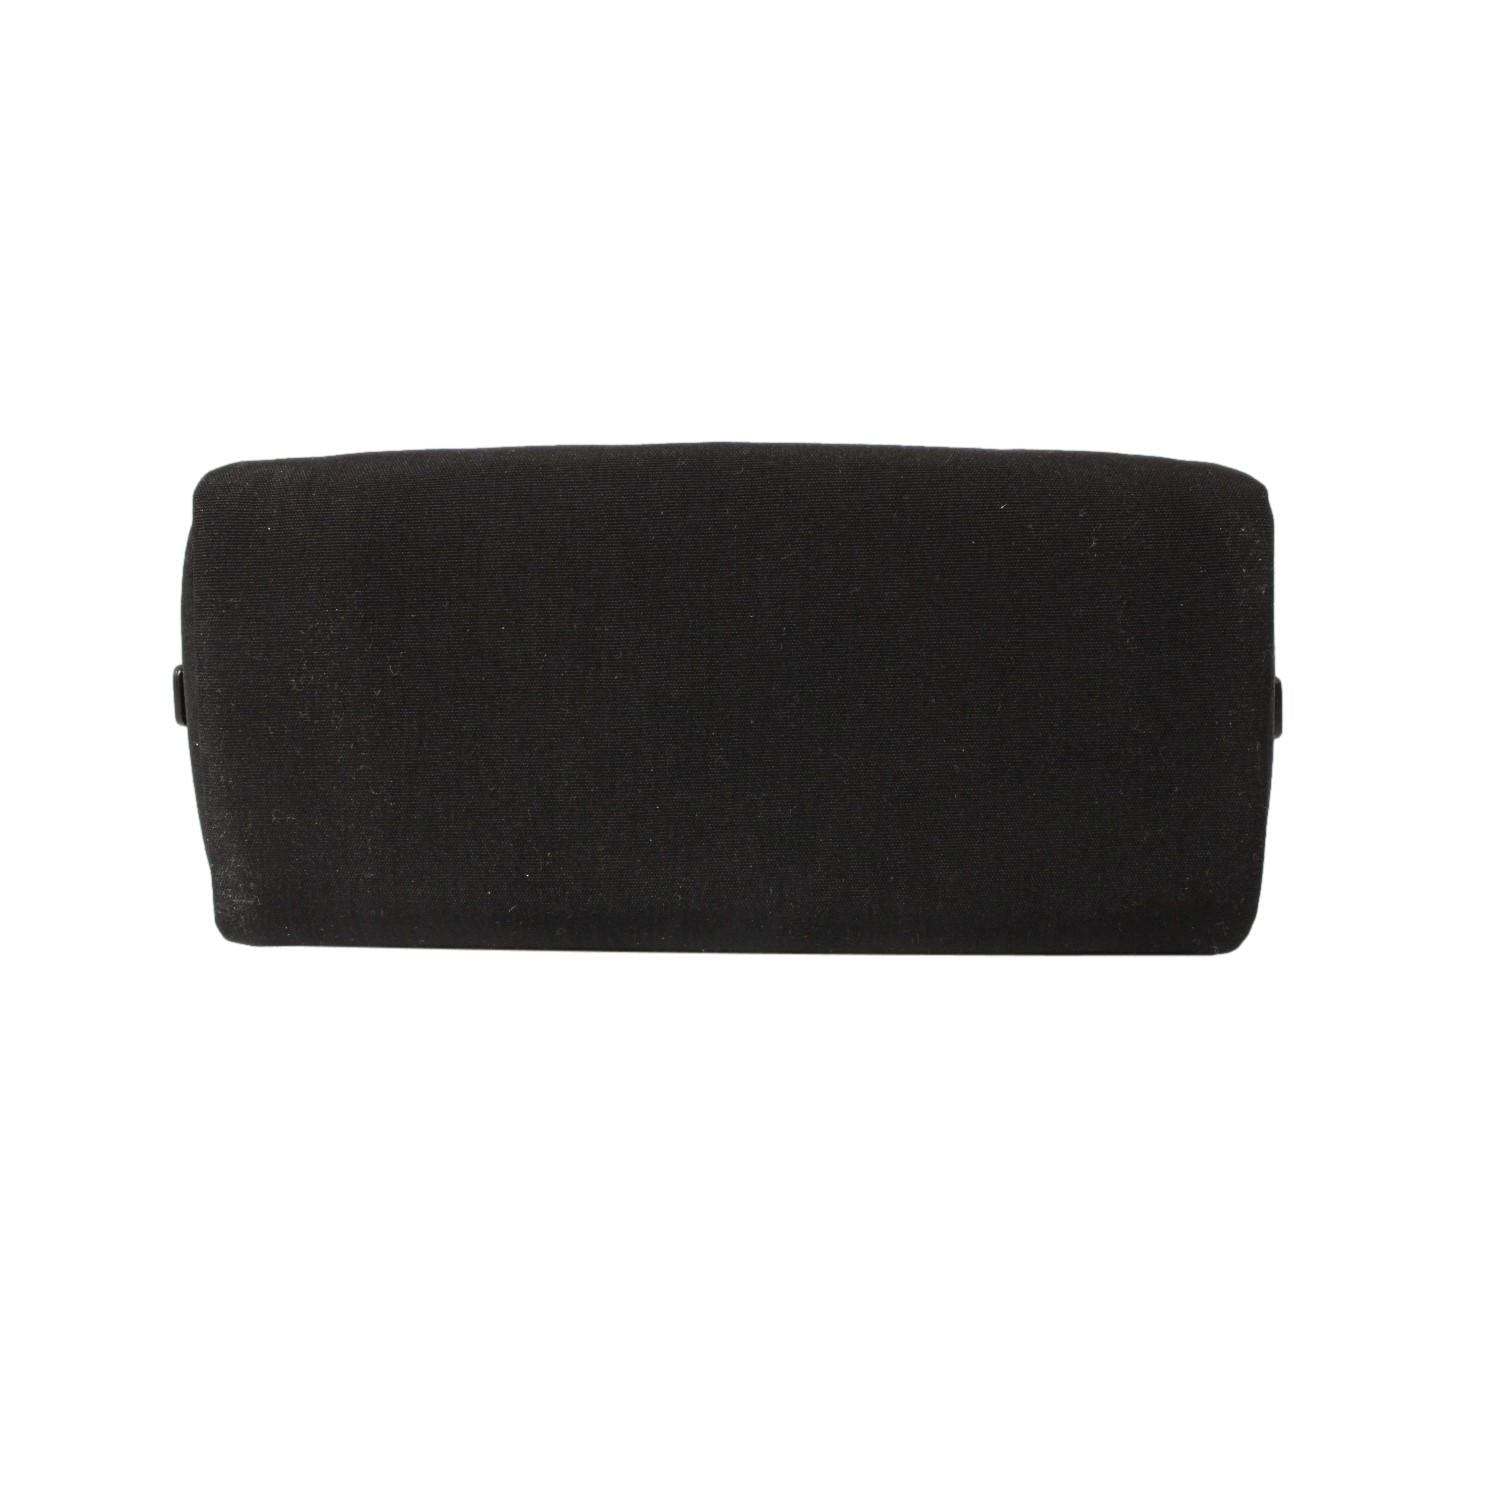 Prada Black Cordura Fabric Cosmetic Clutch